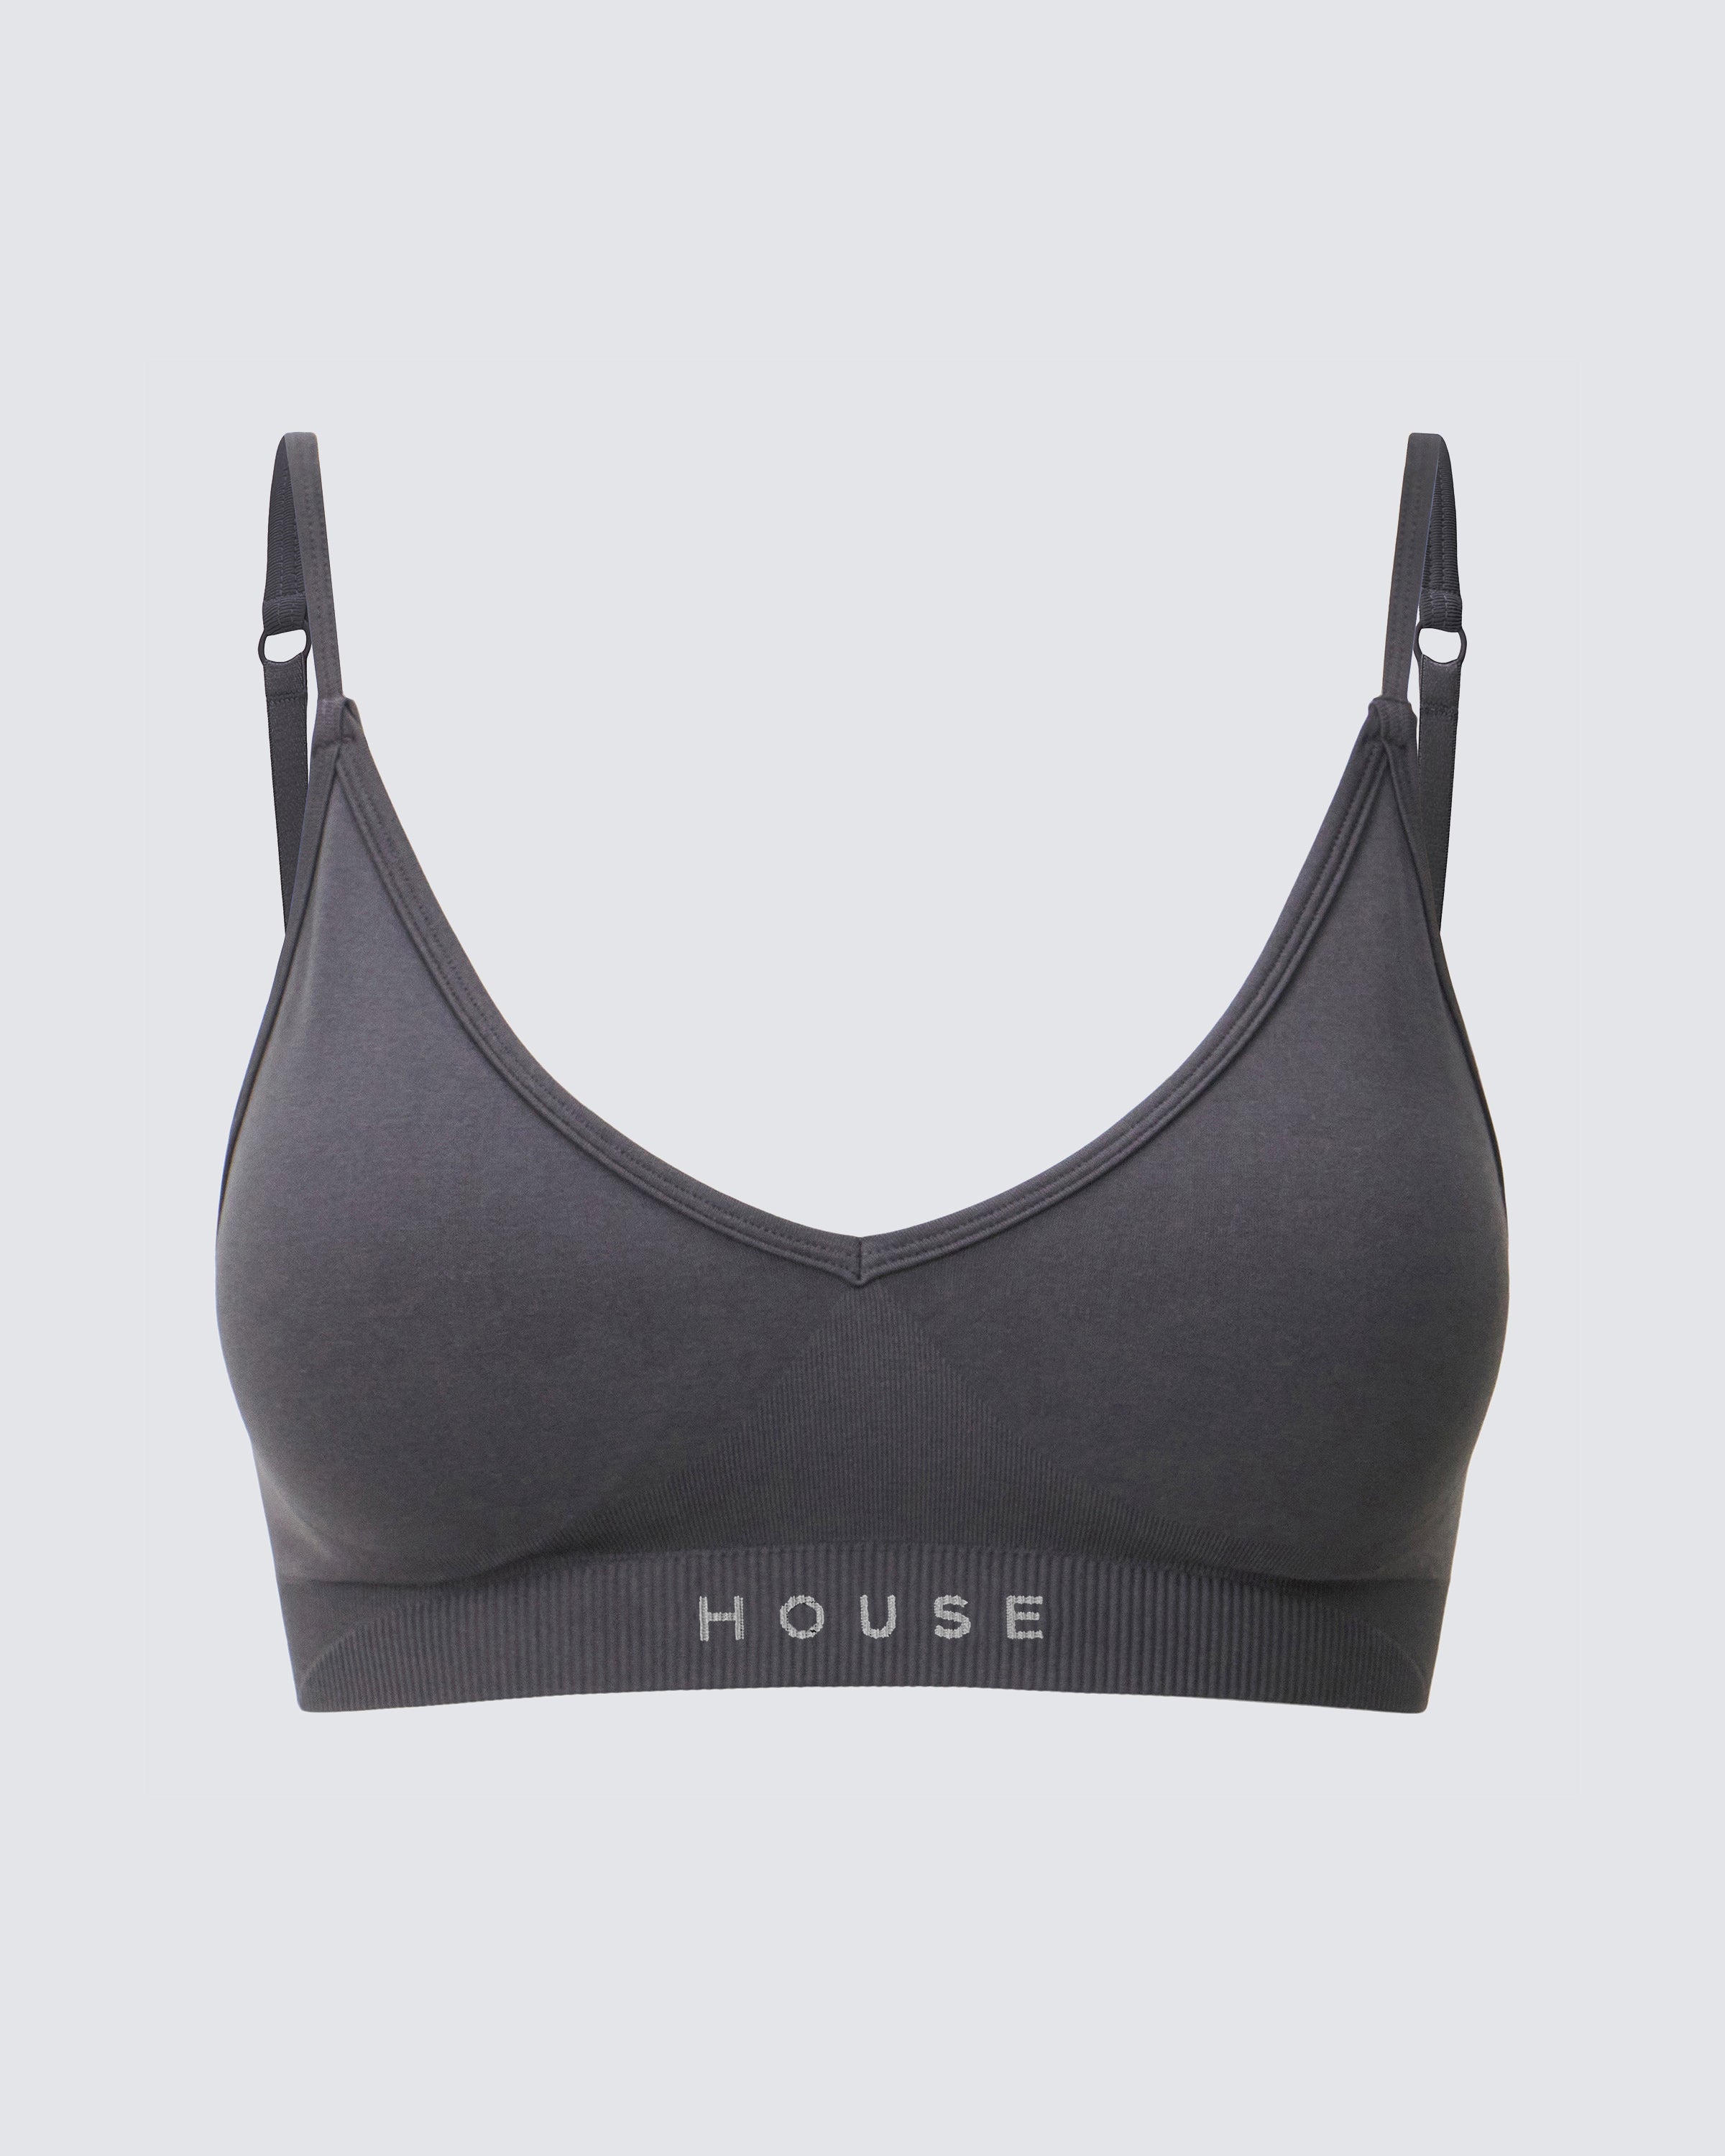 Womens seamless sports bra in dark grey